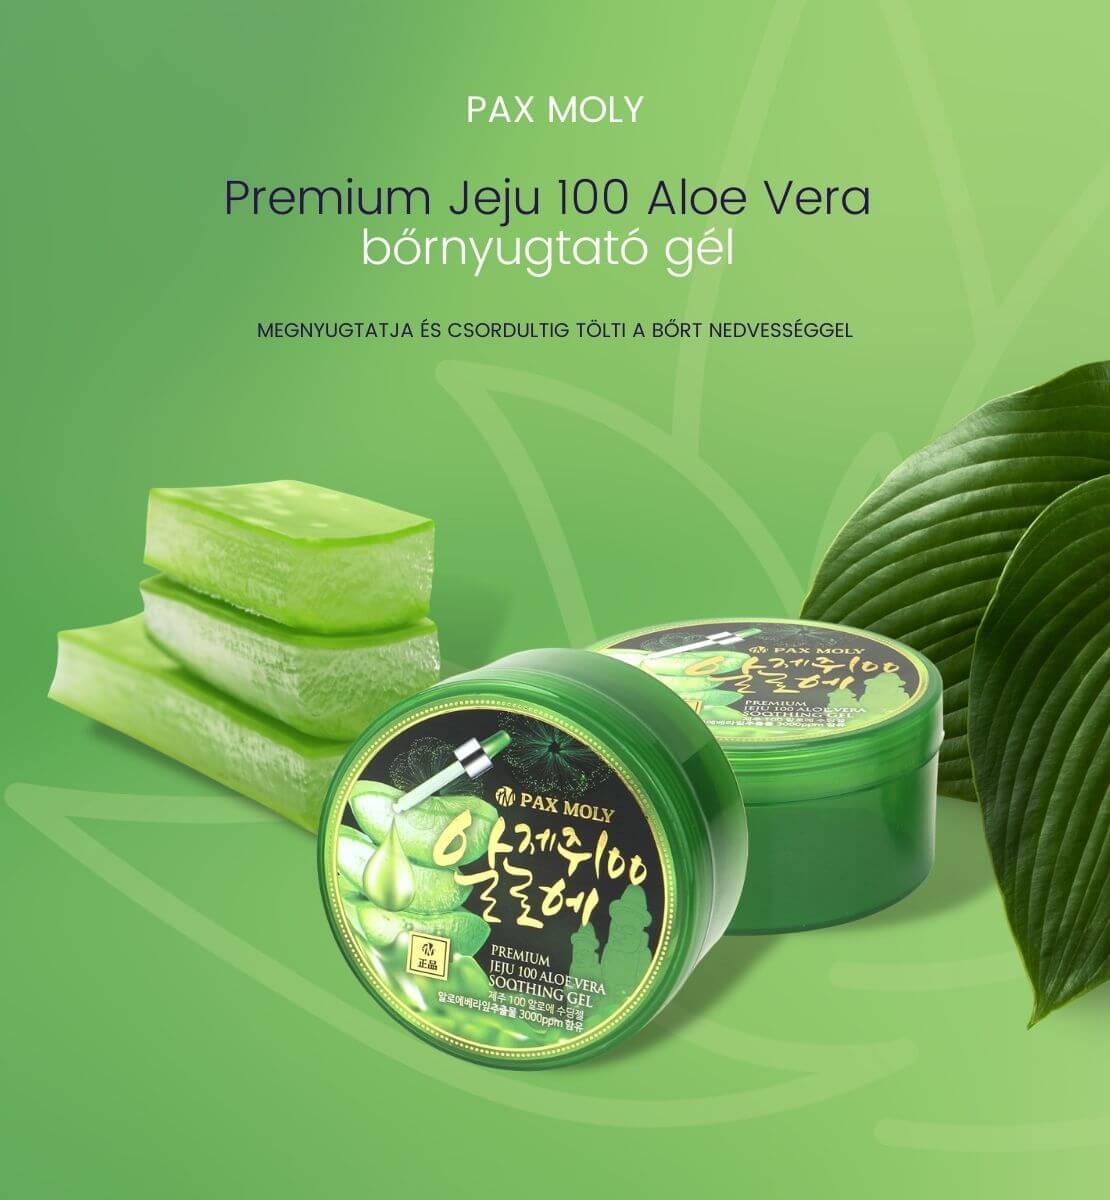 paxmoly-Premium-Jeju-100-Aloe-Vera-bornyugtato-gel 